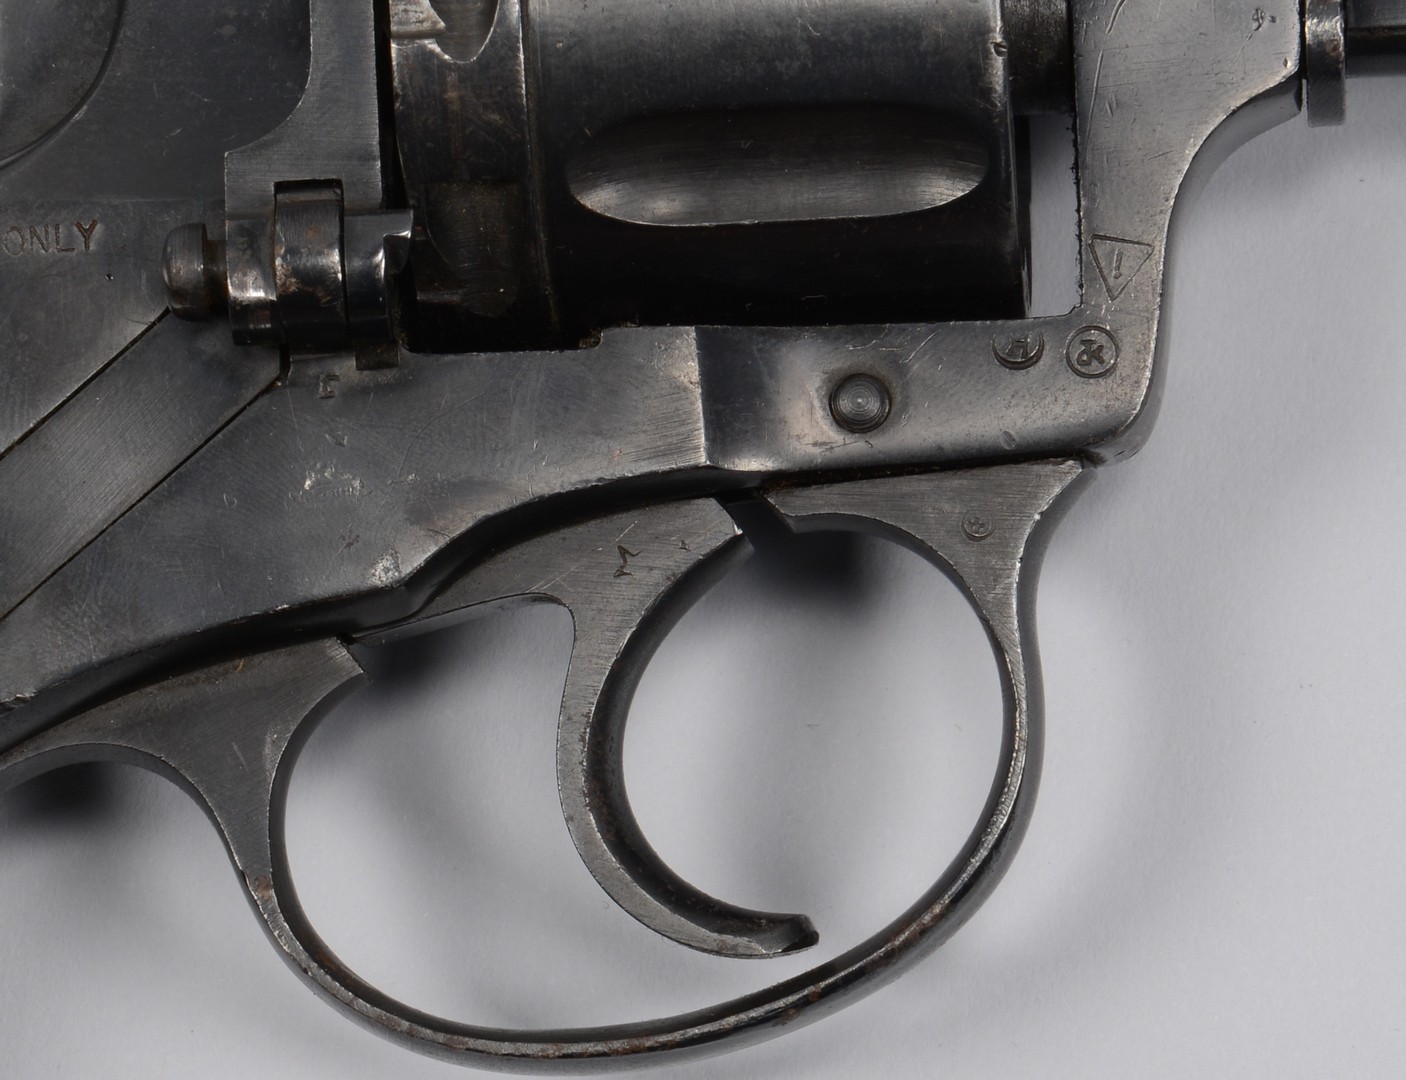 Lot 577: Russian 1936 Nagant Revolver